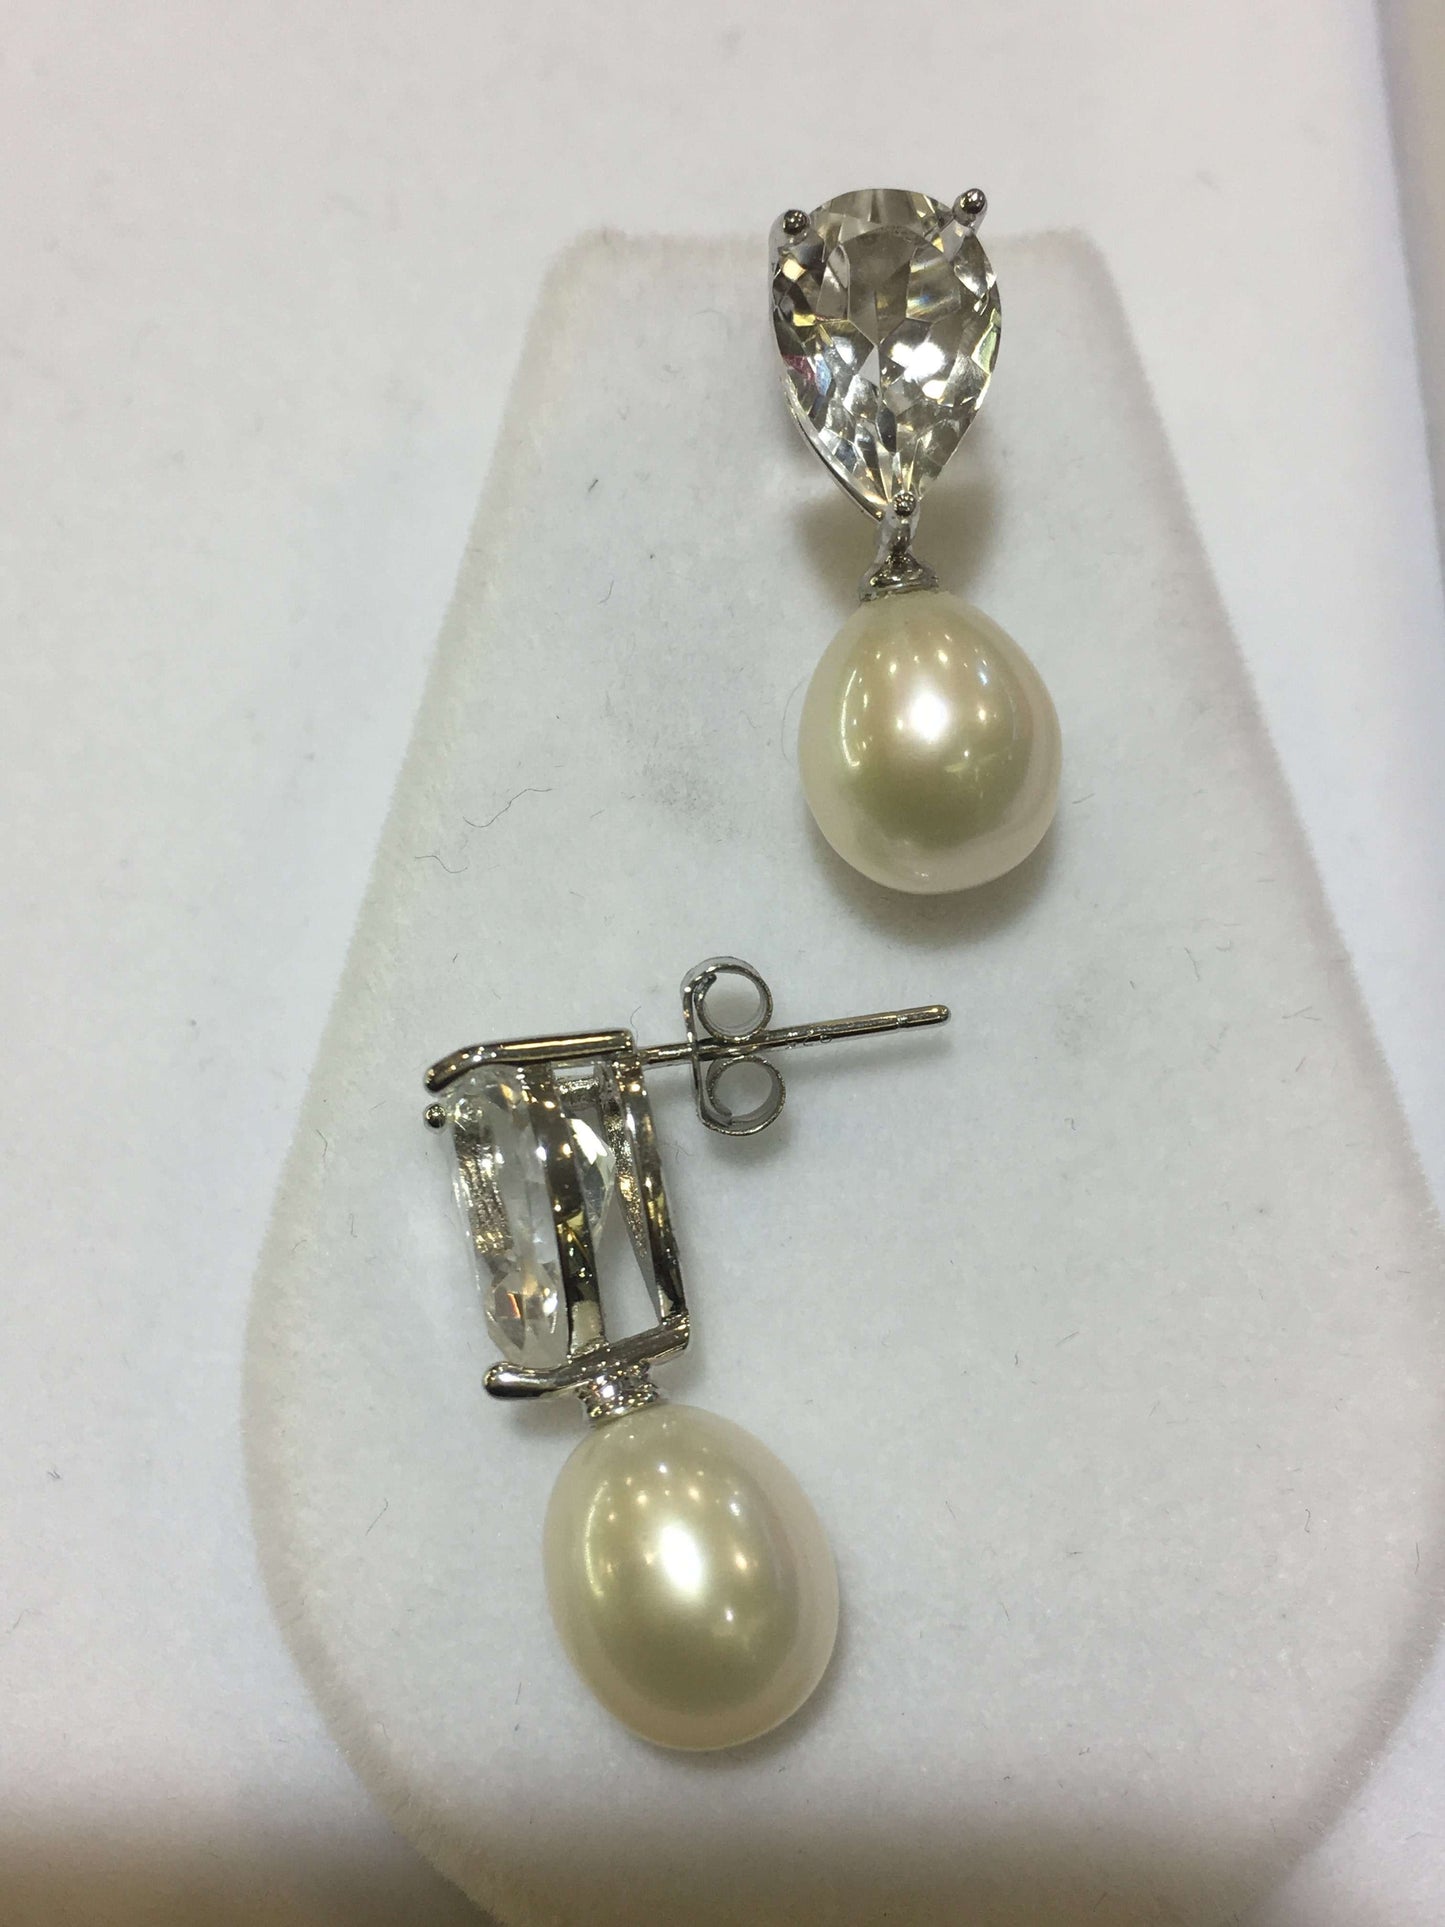 Italian Sterling Silver Earrings with Pearls